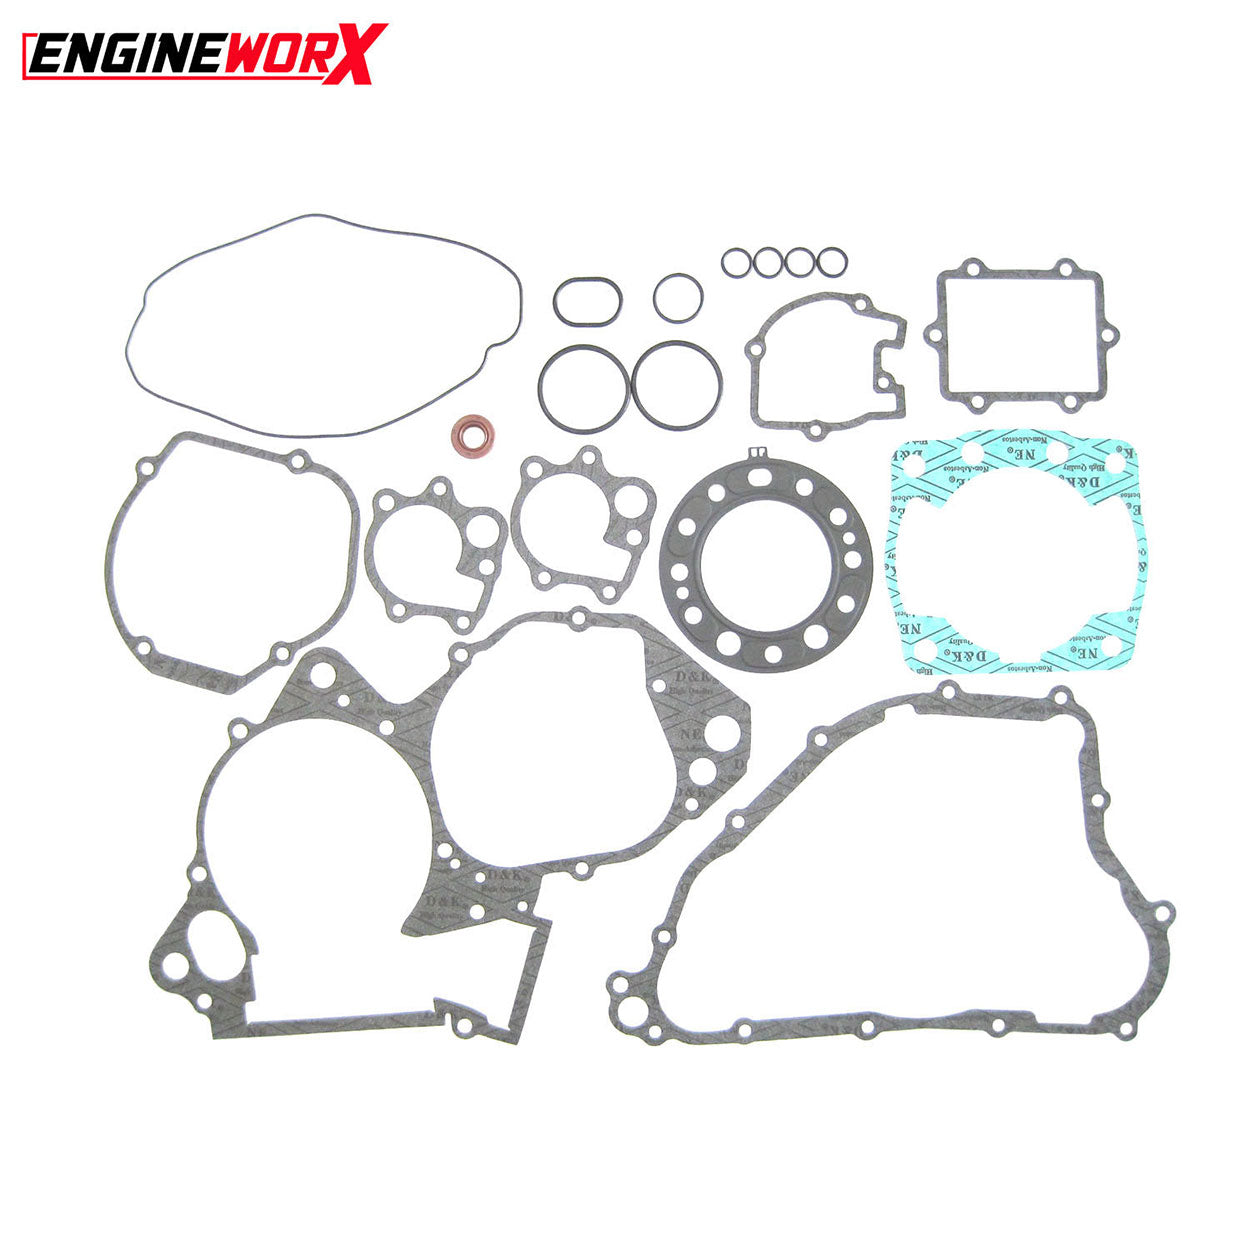 Engineworx Full Gasket Kit Honda CR 250 05-07